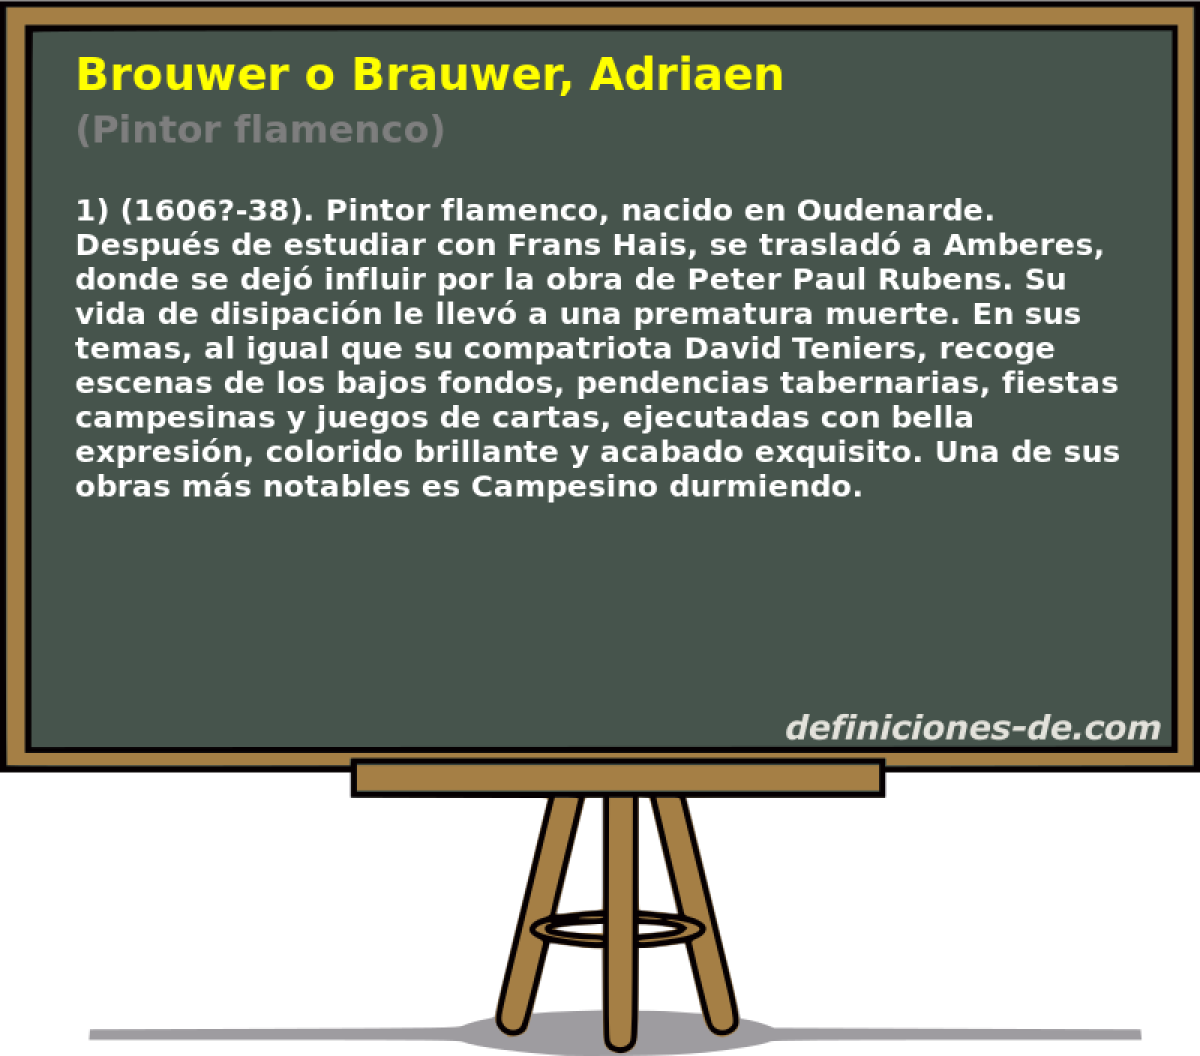 Brouwer o Brauwer, Adriaen (Pintor flamenco)